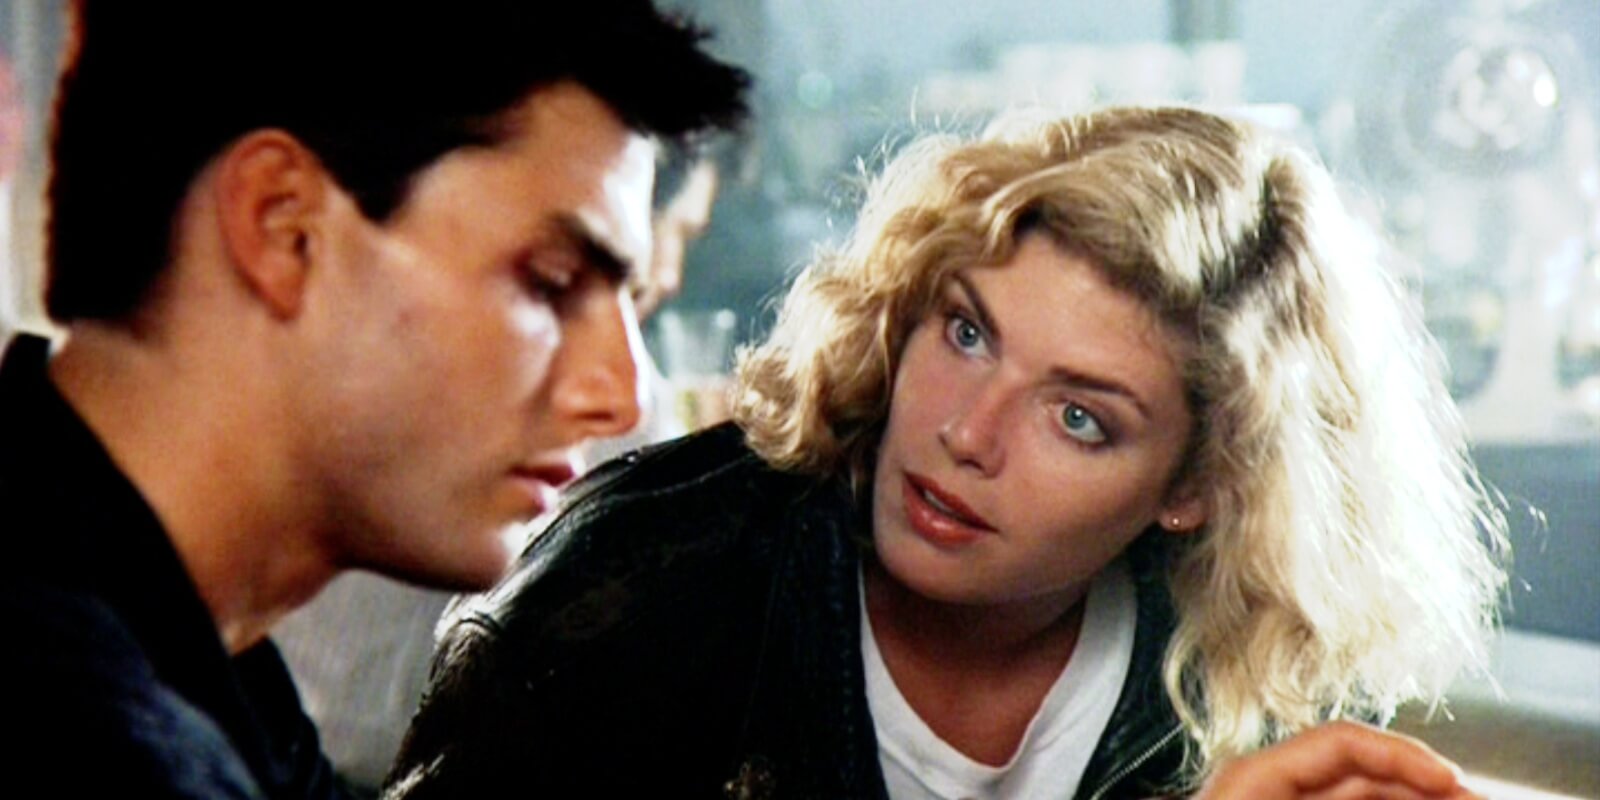 Tom Cruise and Kelly McGillis in the 1986 film 'Top Gun.'